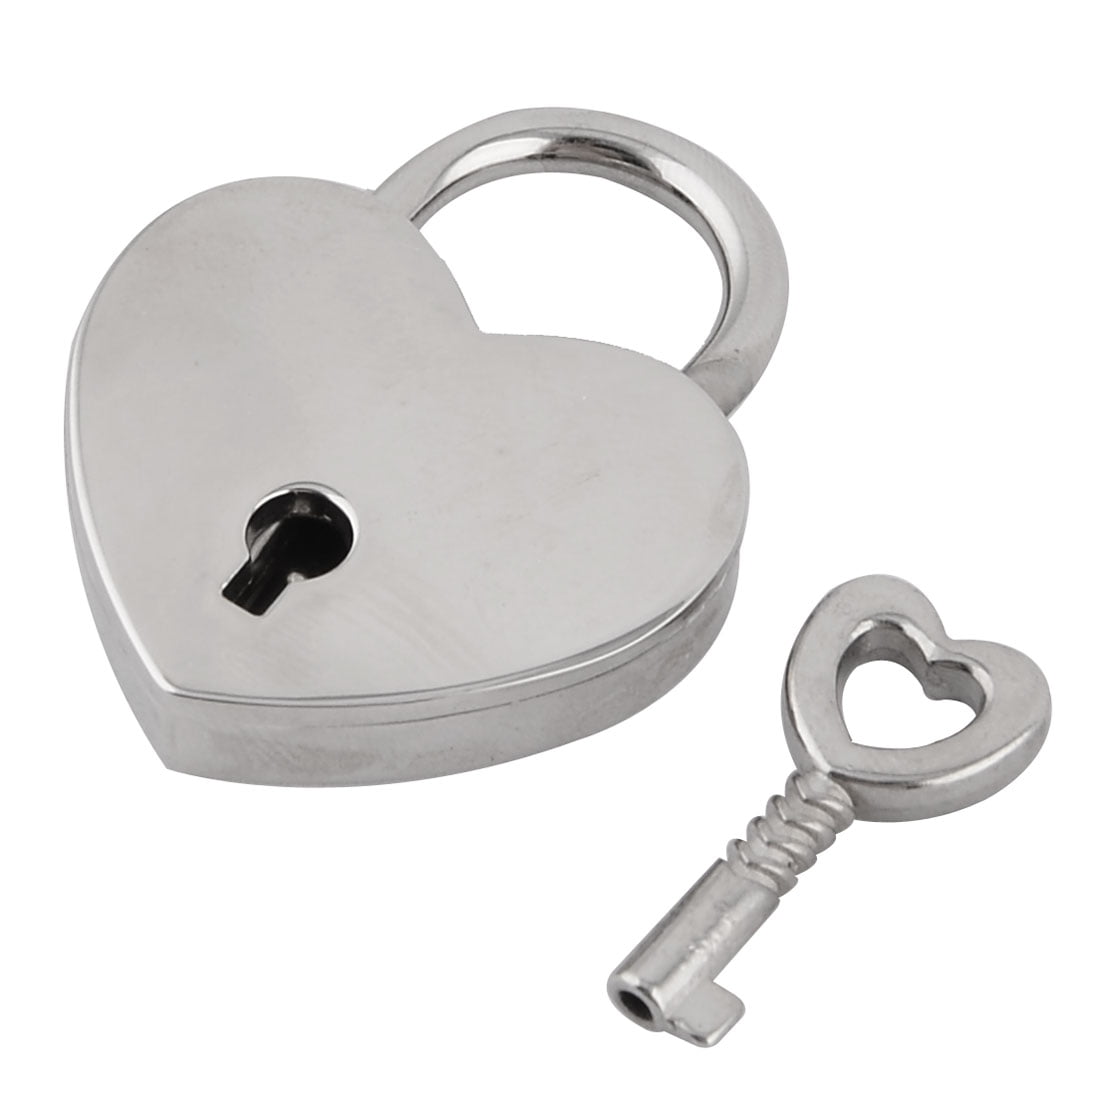 2Pcs Silver Metal Heart Shape Padlock Luggage Luggage Bags Lock With Key Mini Vl 